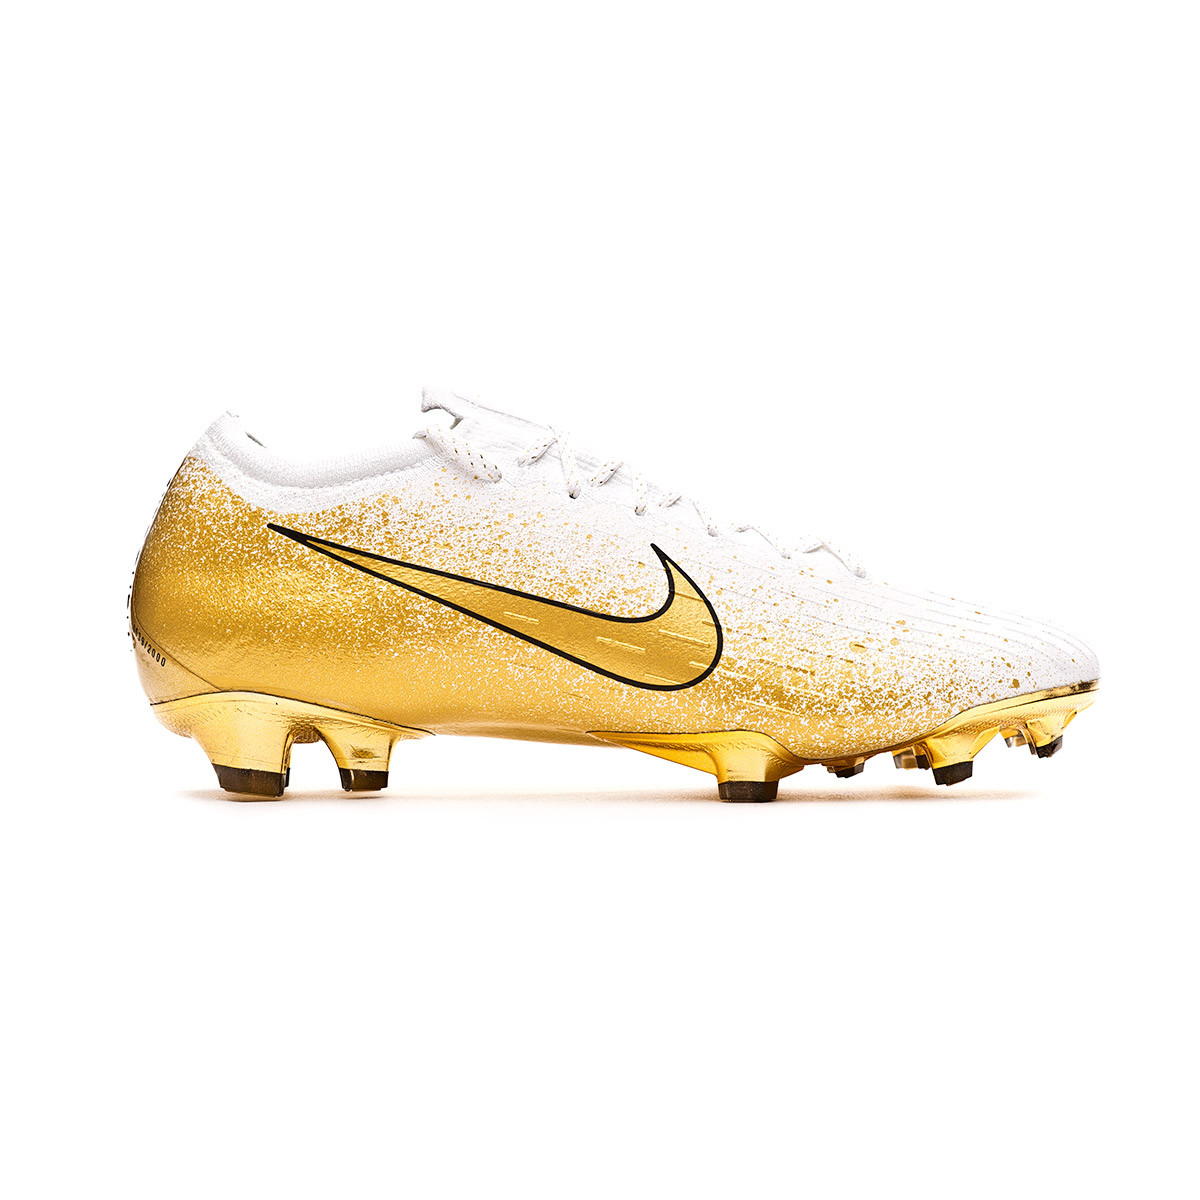 nike football shoes gold